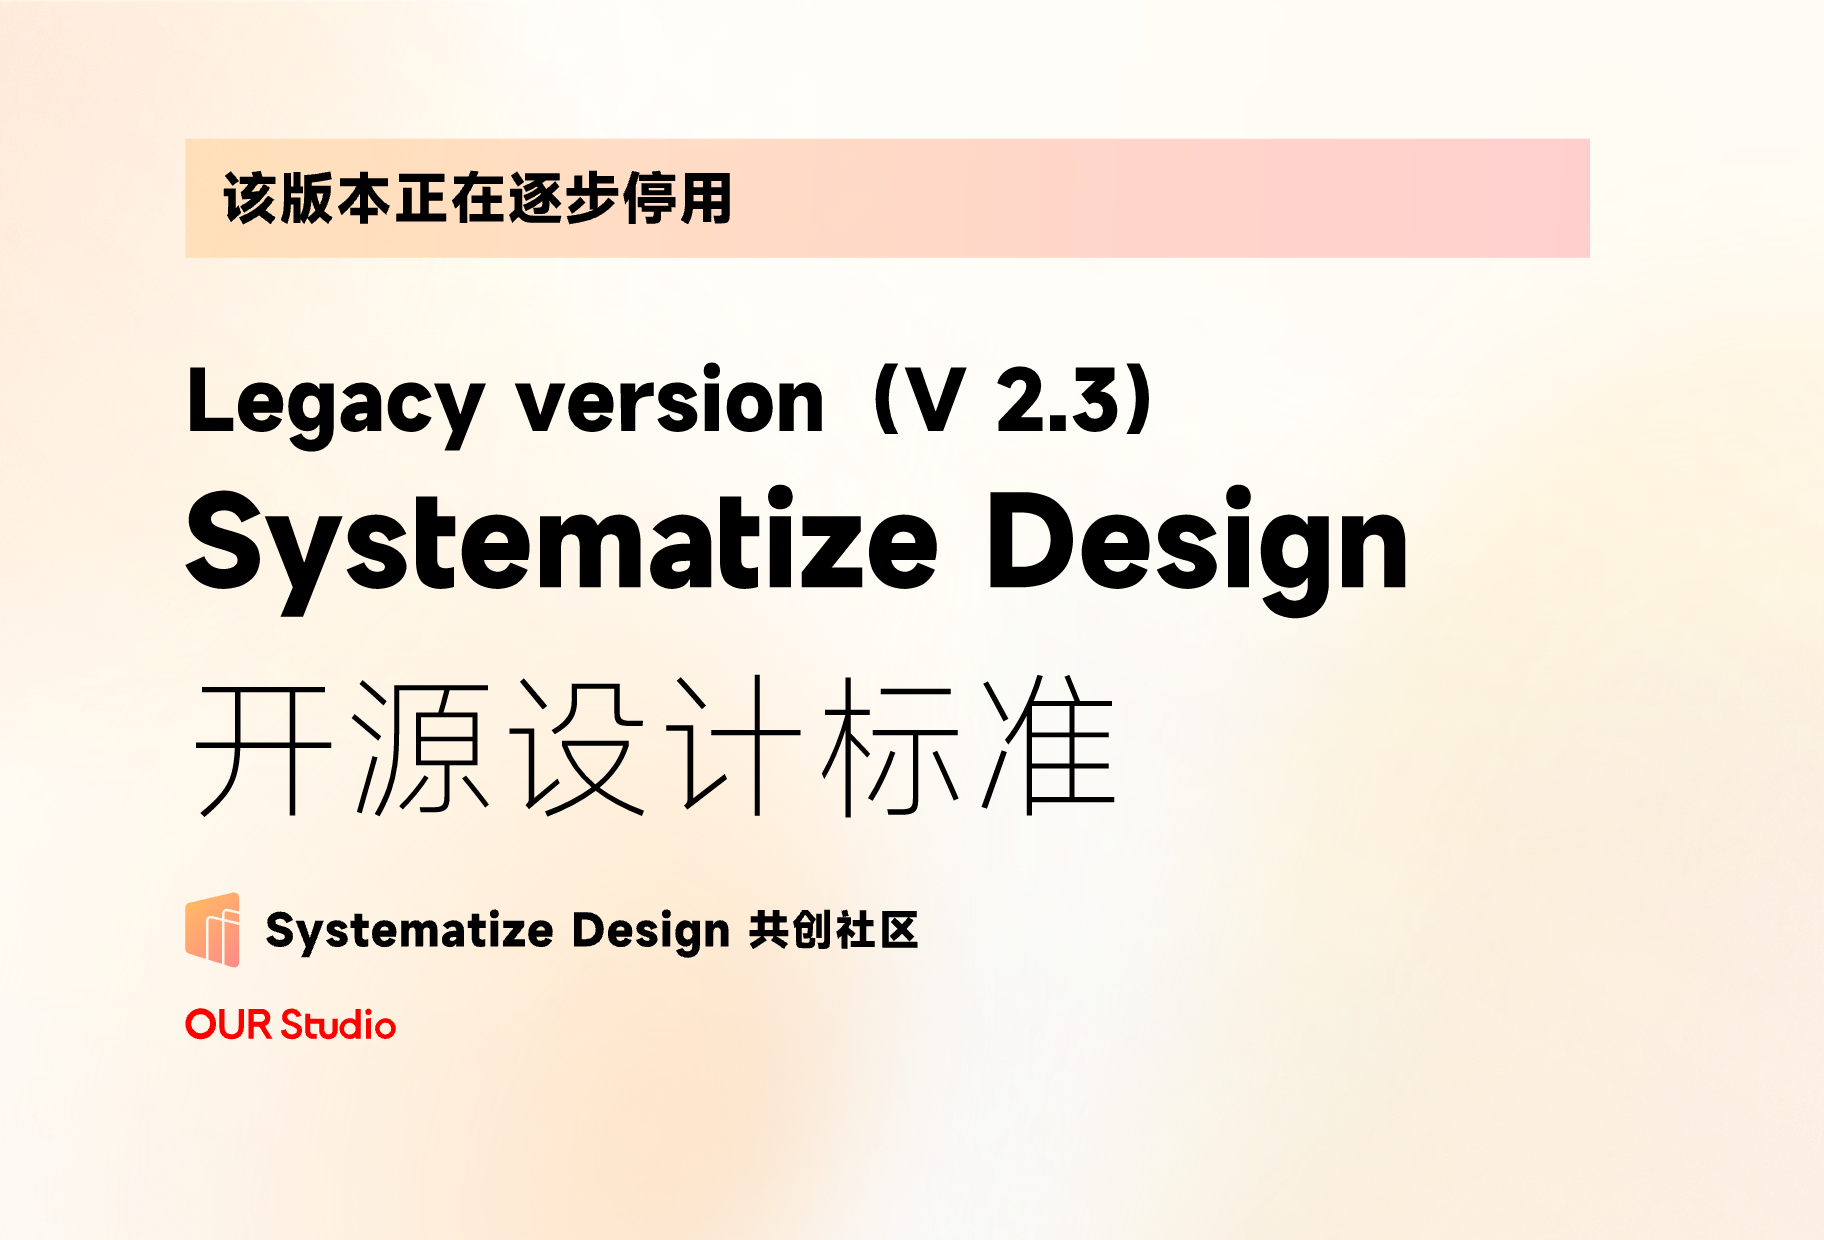 Systematize Design 旧版（V2.3）